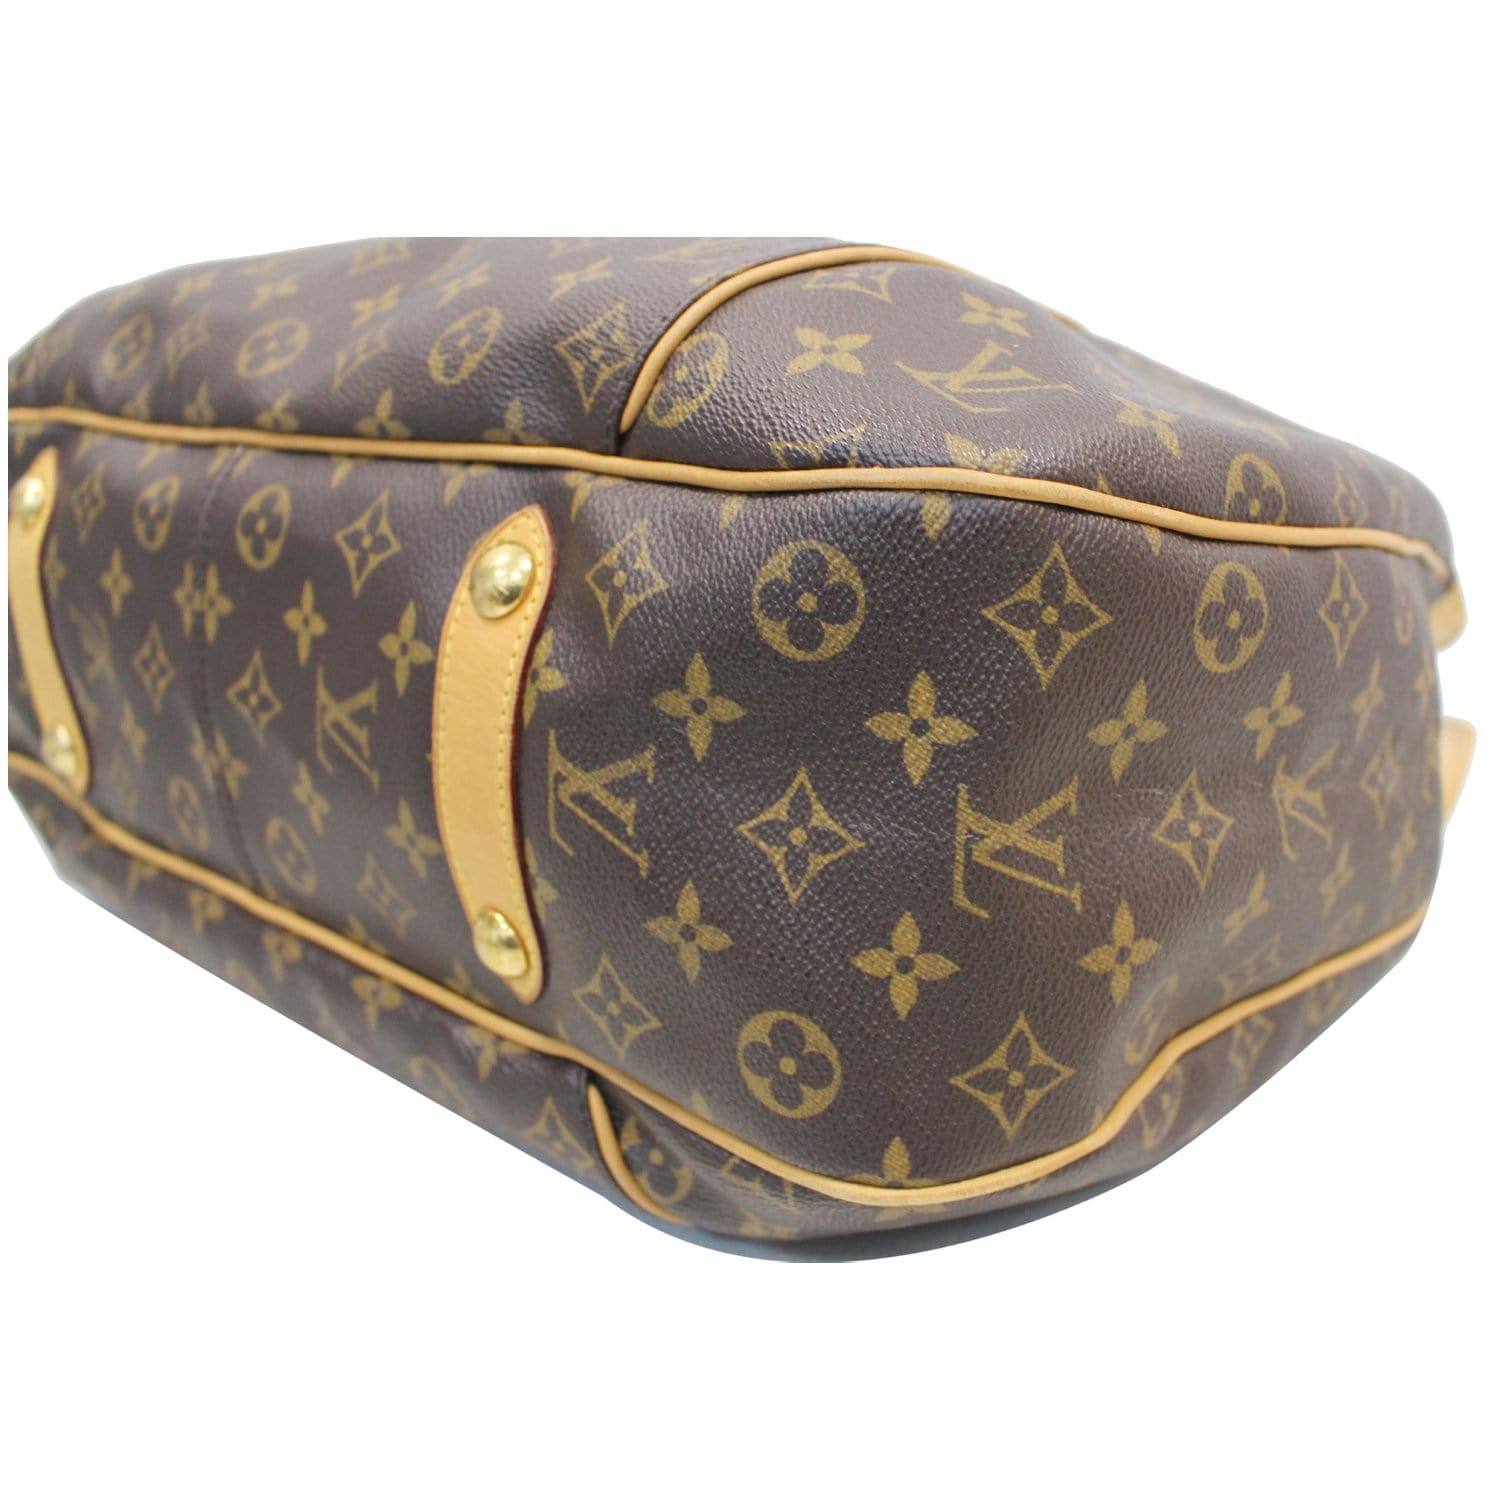 Galliera leather handbag Louis Vuitton Brown in Leather - 29167641